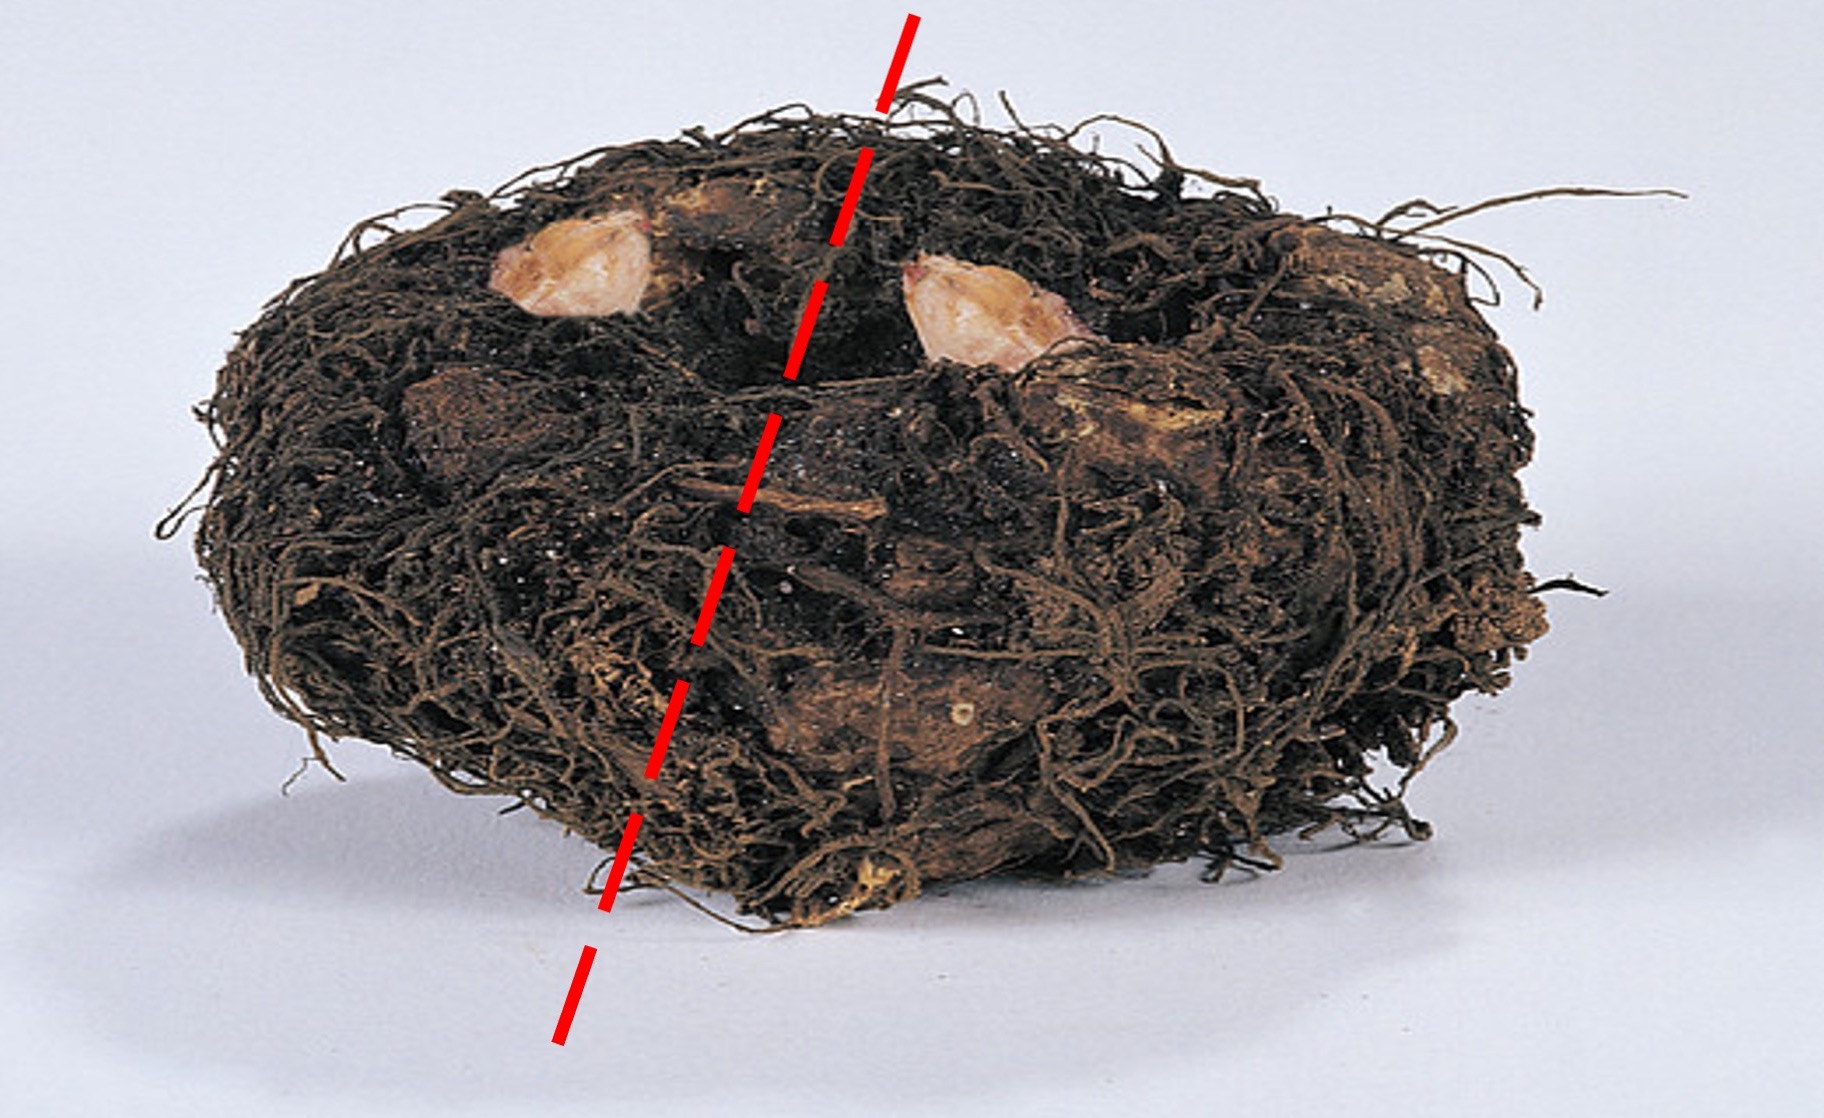 Tuberous begonia tuber showing where to cut.